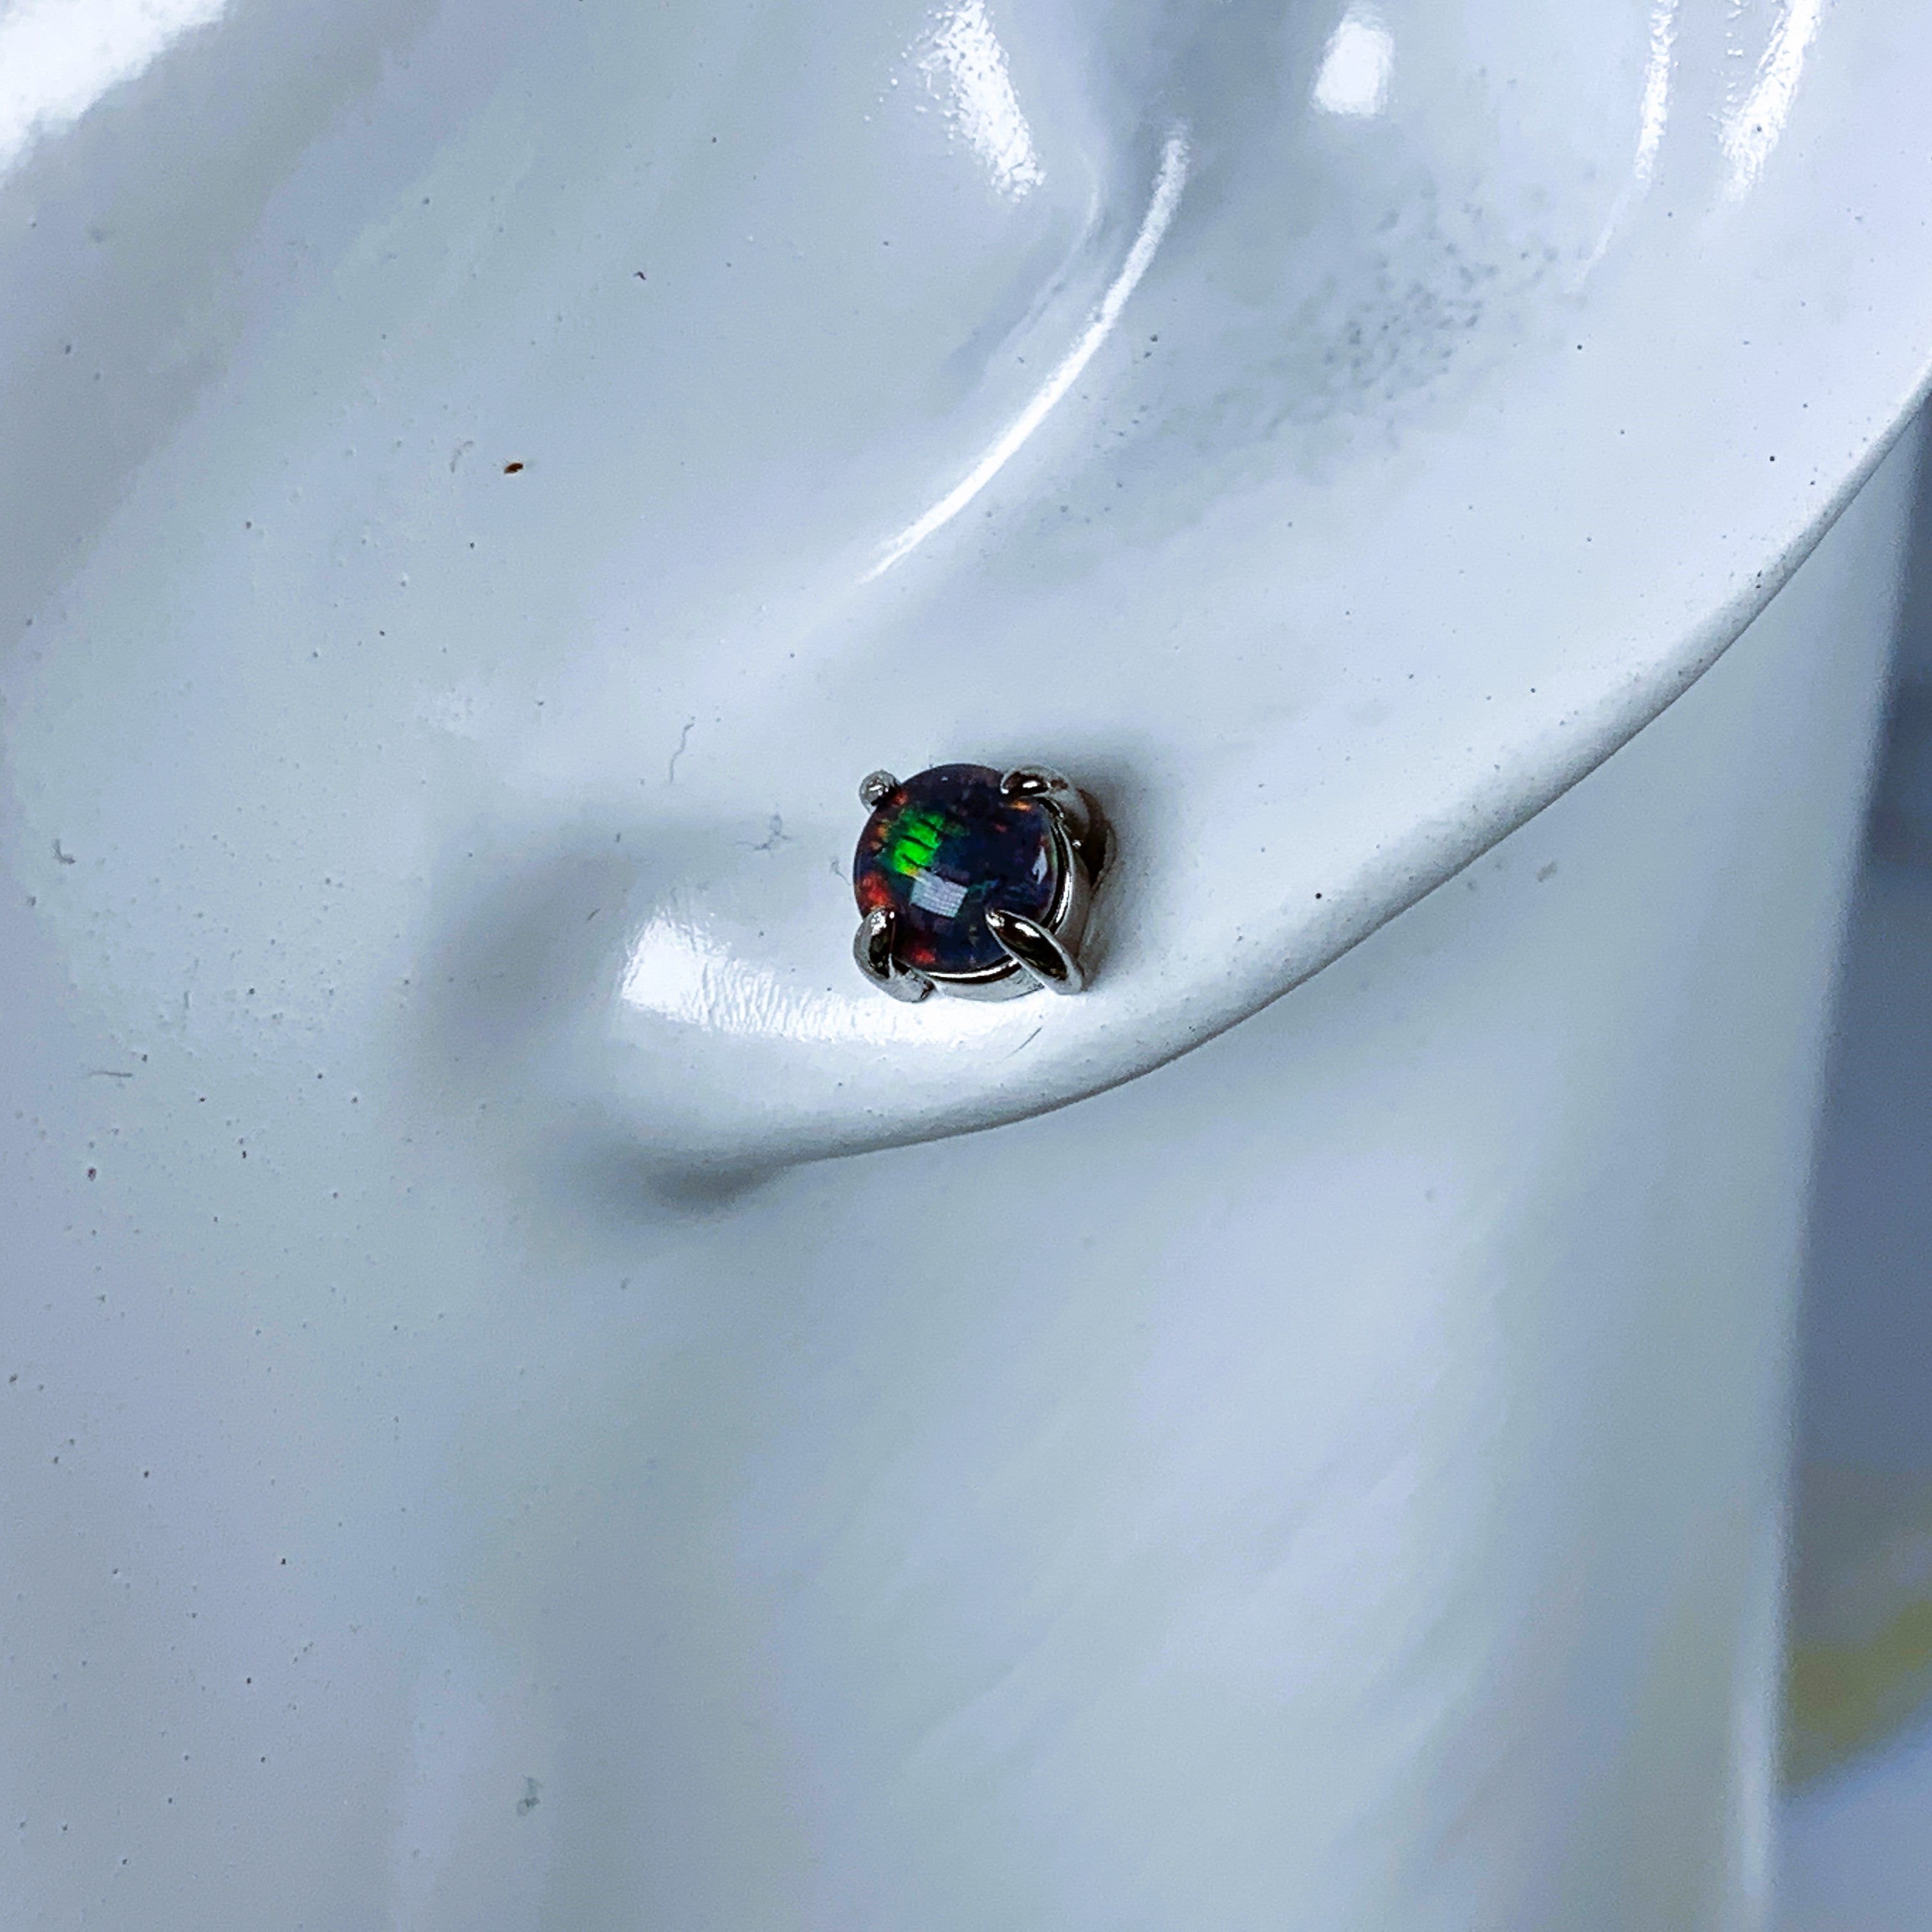 Sterling silver 5mm round Opal triplet claw studs - Masterpiece Jewellery Opal & Gems Sydney Australia | Online Shop